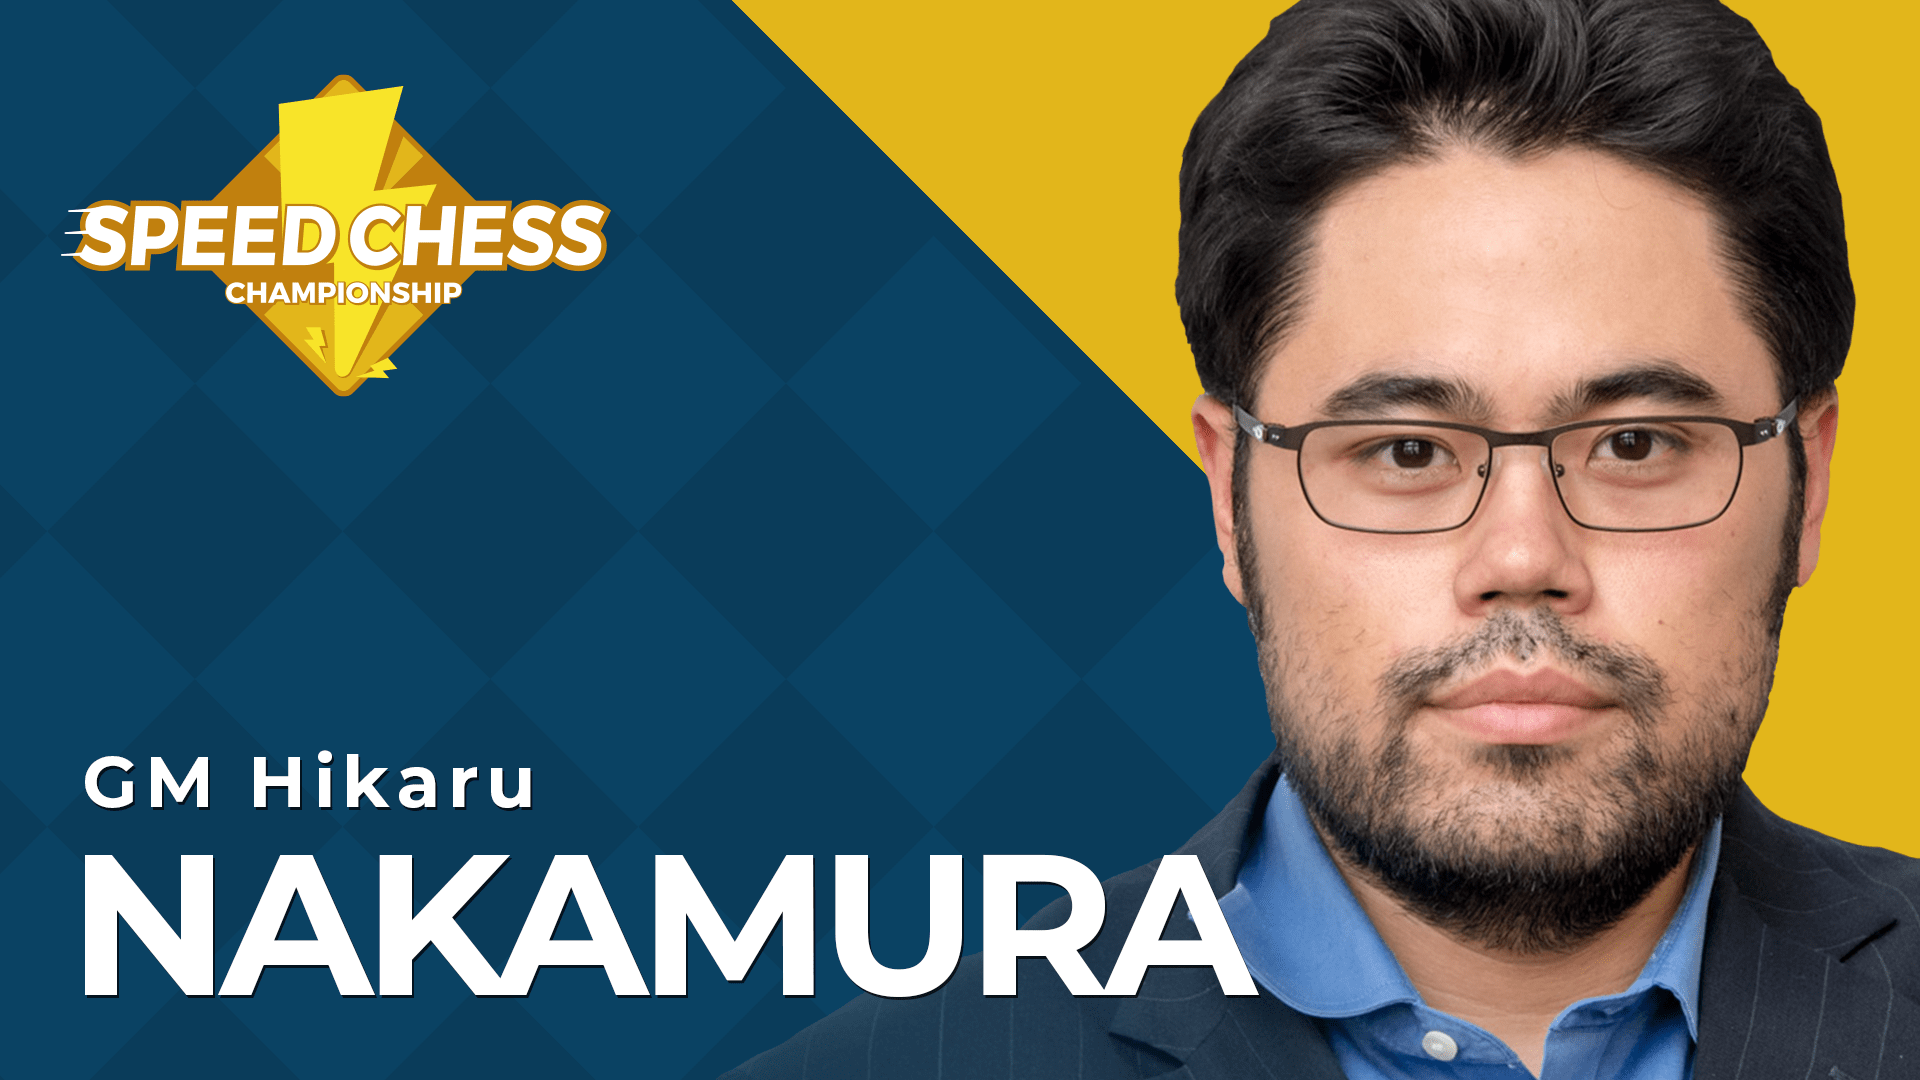 Hikaru Nakamura qualifies for the 2022 Candidates Tournament - Dot Esports